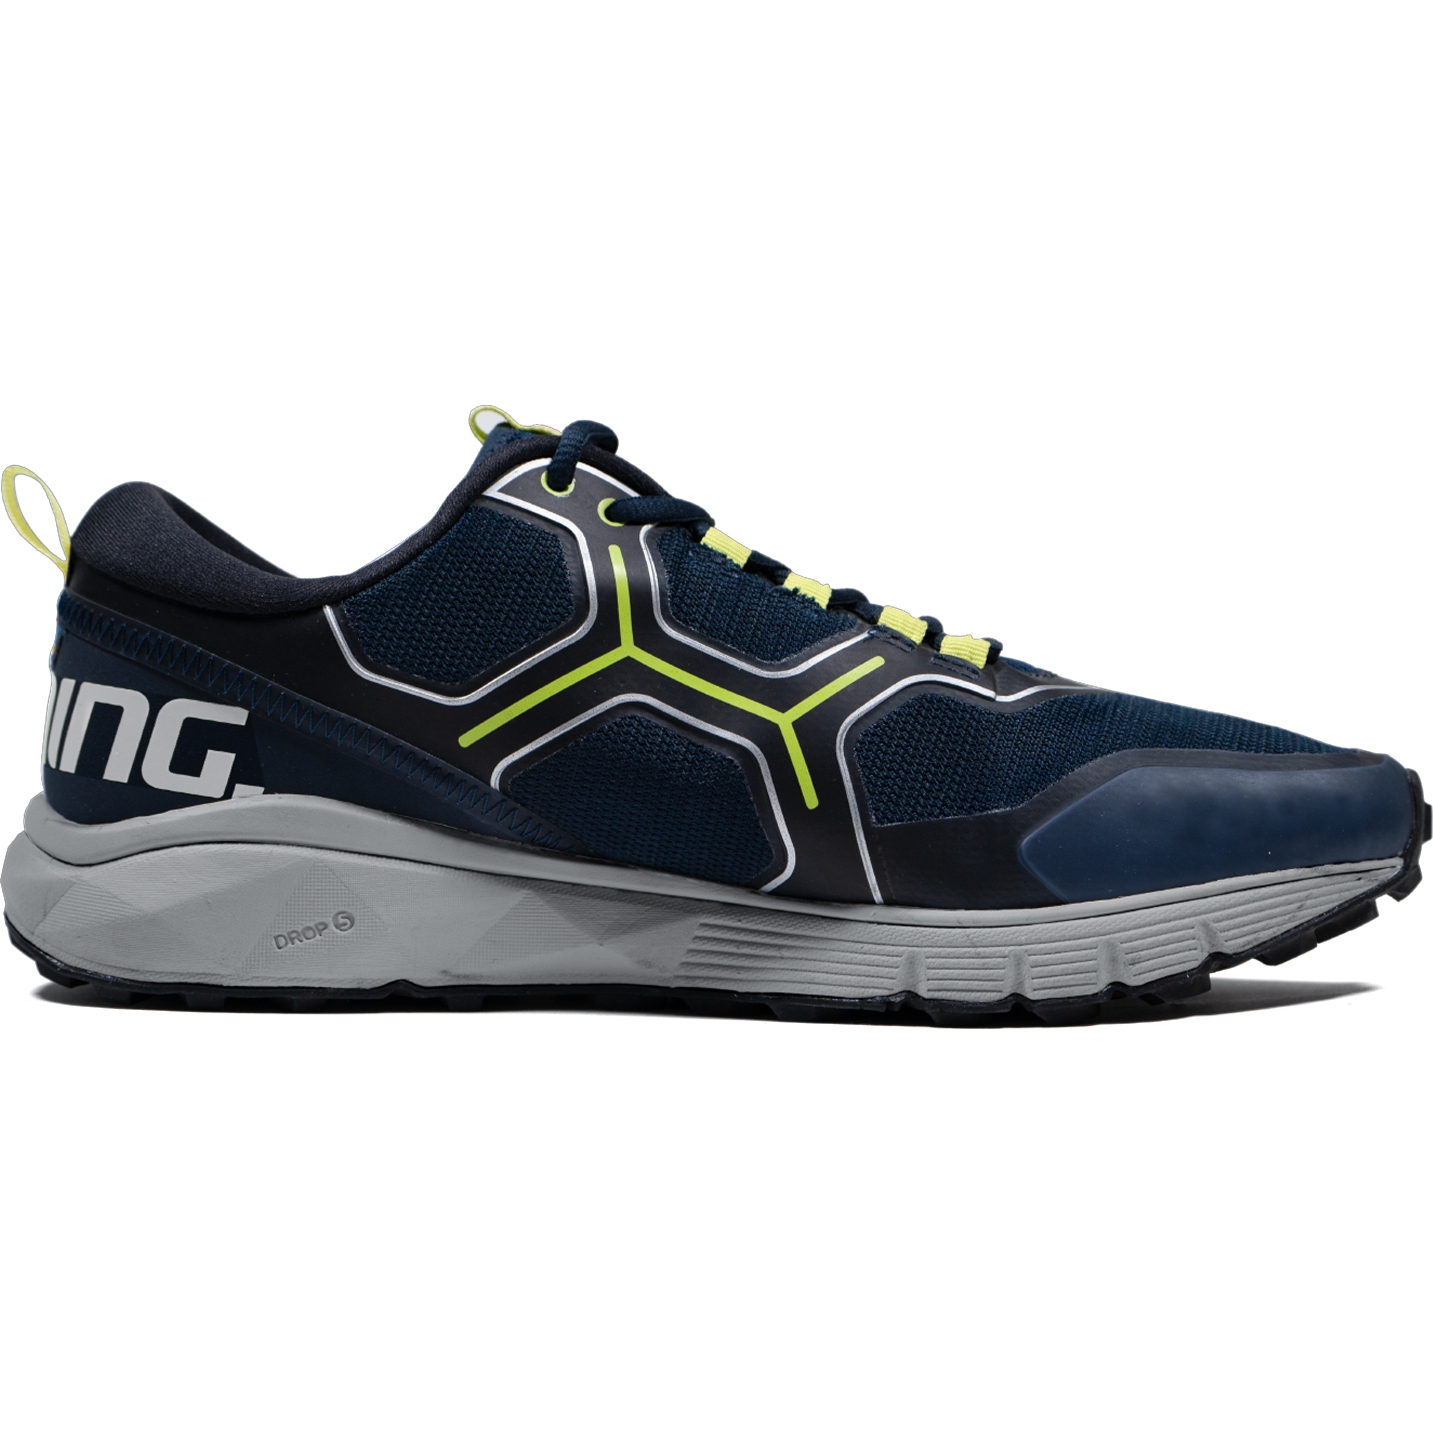 Productfoto van Salming Recoil Trail Shoes Men - dress blue/lime punch/white